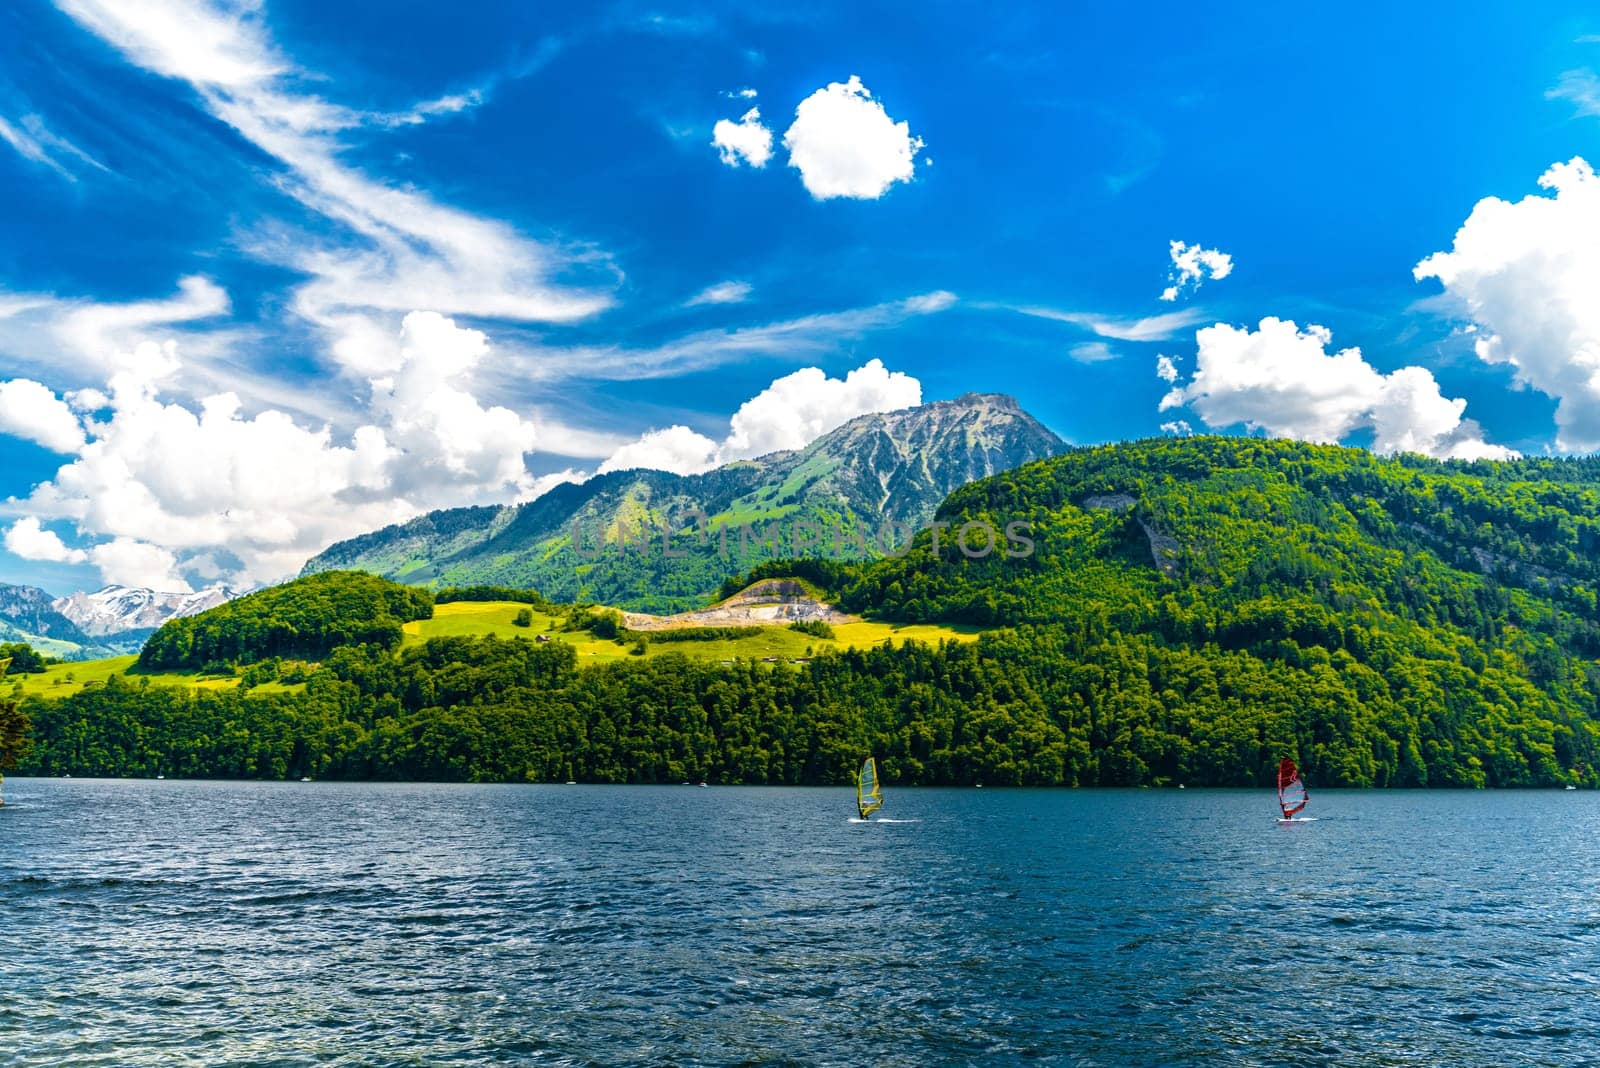 Windsurfers in the lake with mountains, Alpnachstadt, Alpnach Obwalden Switzerland by Eagle2308